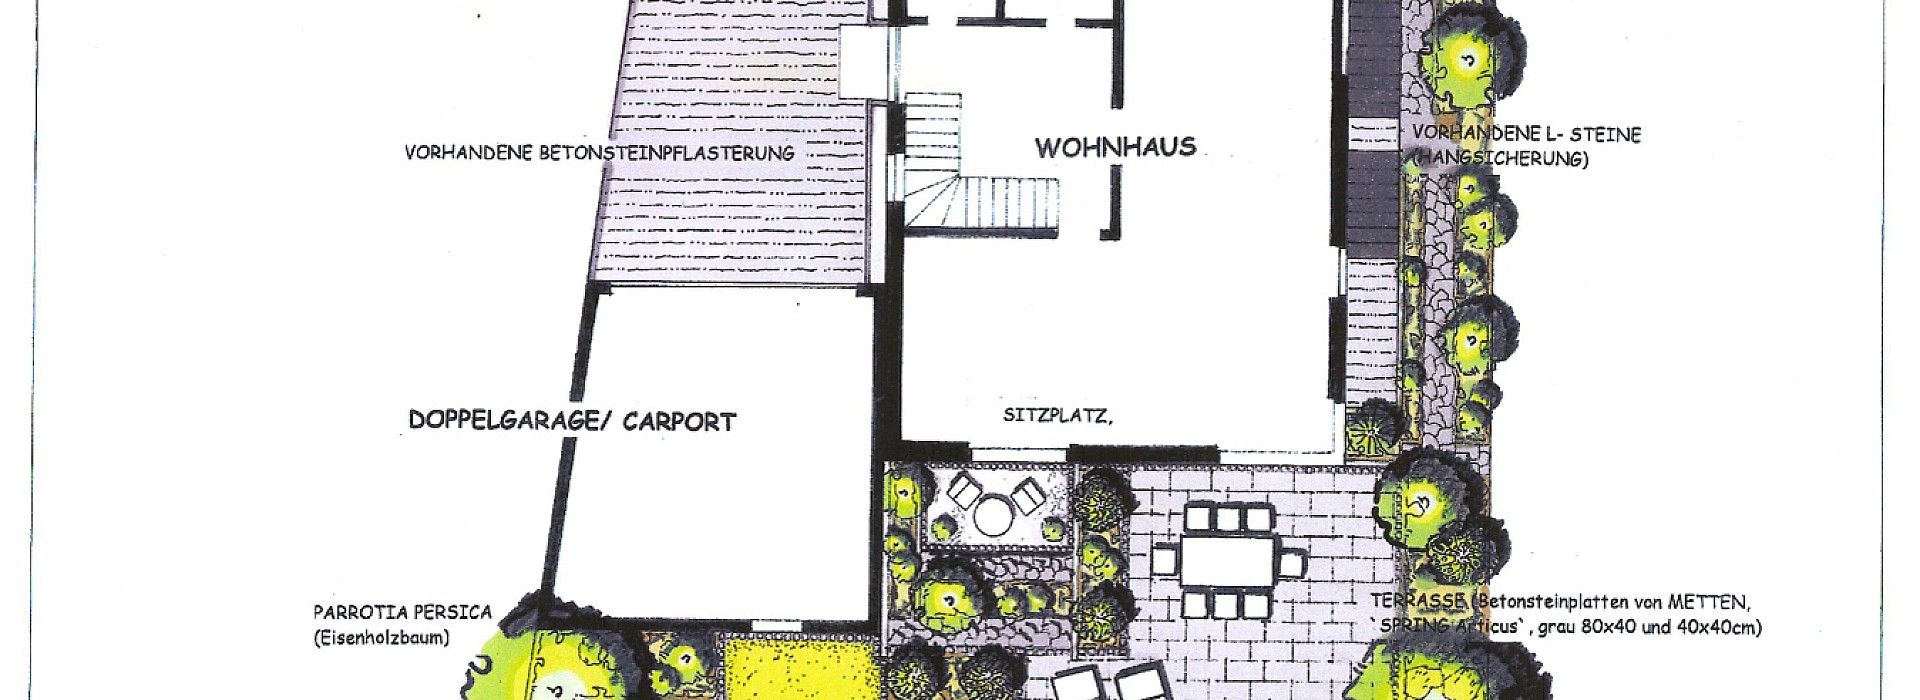 dahlen--Plan-12-Hausgarten.jpg